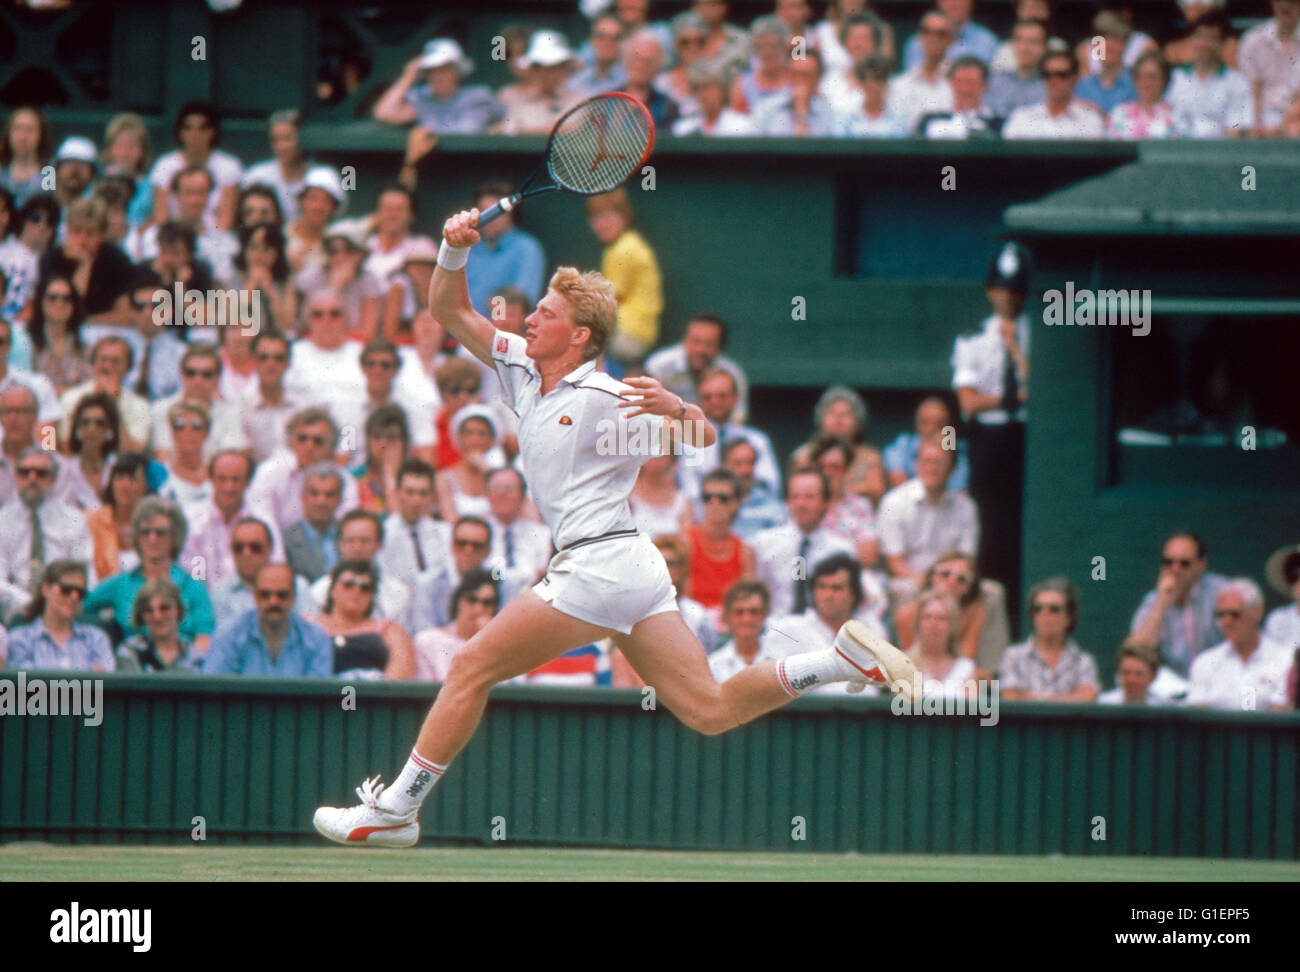 Der Deutsche Tennisspieler Boris Becker, Deutschland 1980er Jahre. Deutscher Tennisspieler Boris Becker, Deutschland der 1980er Jahre. Stockfoto